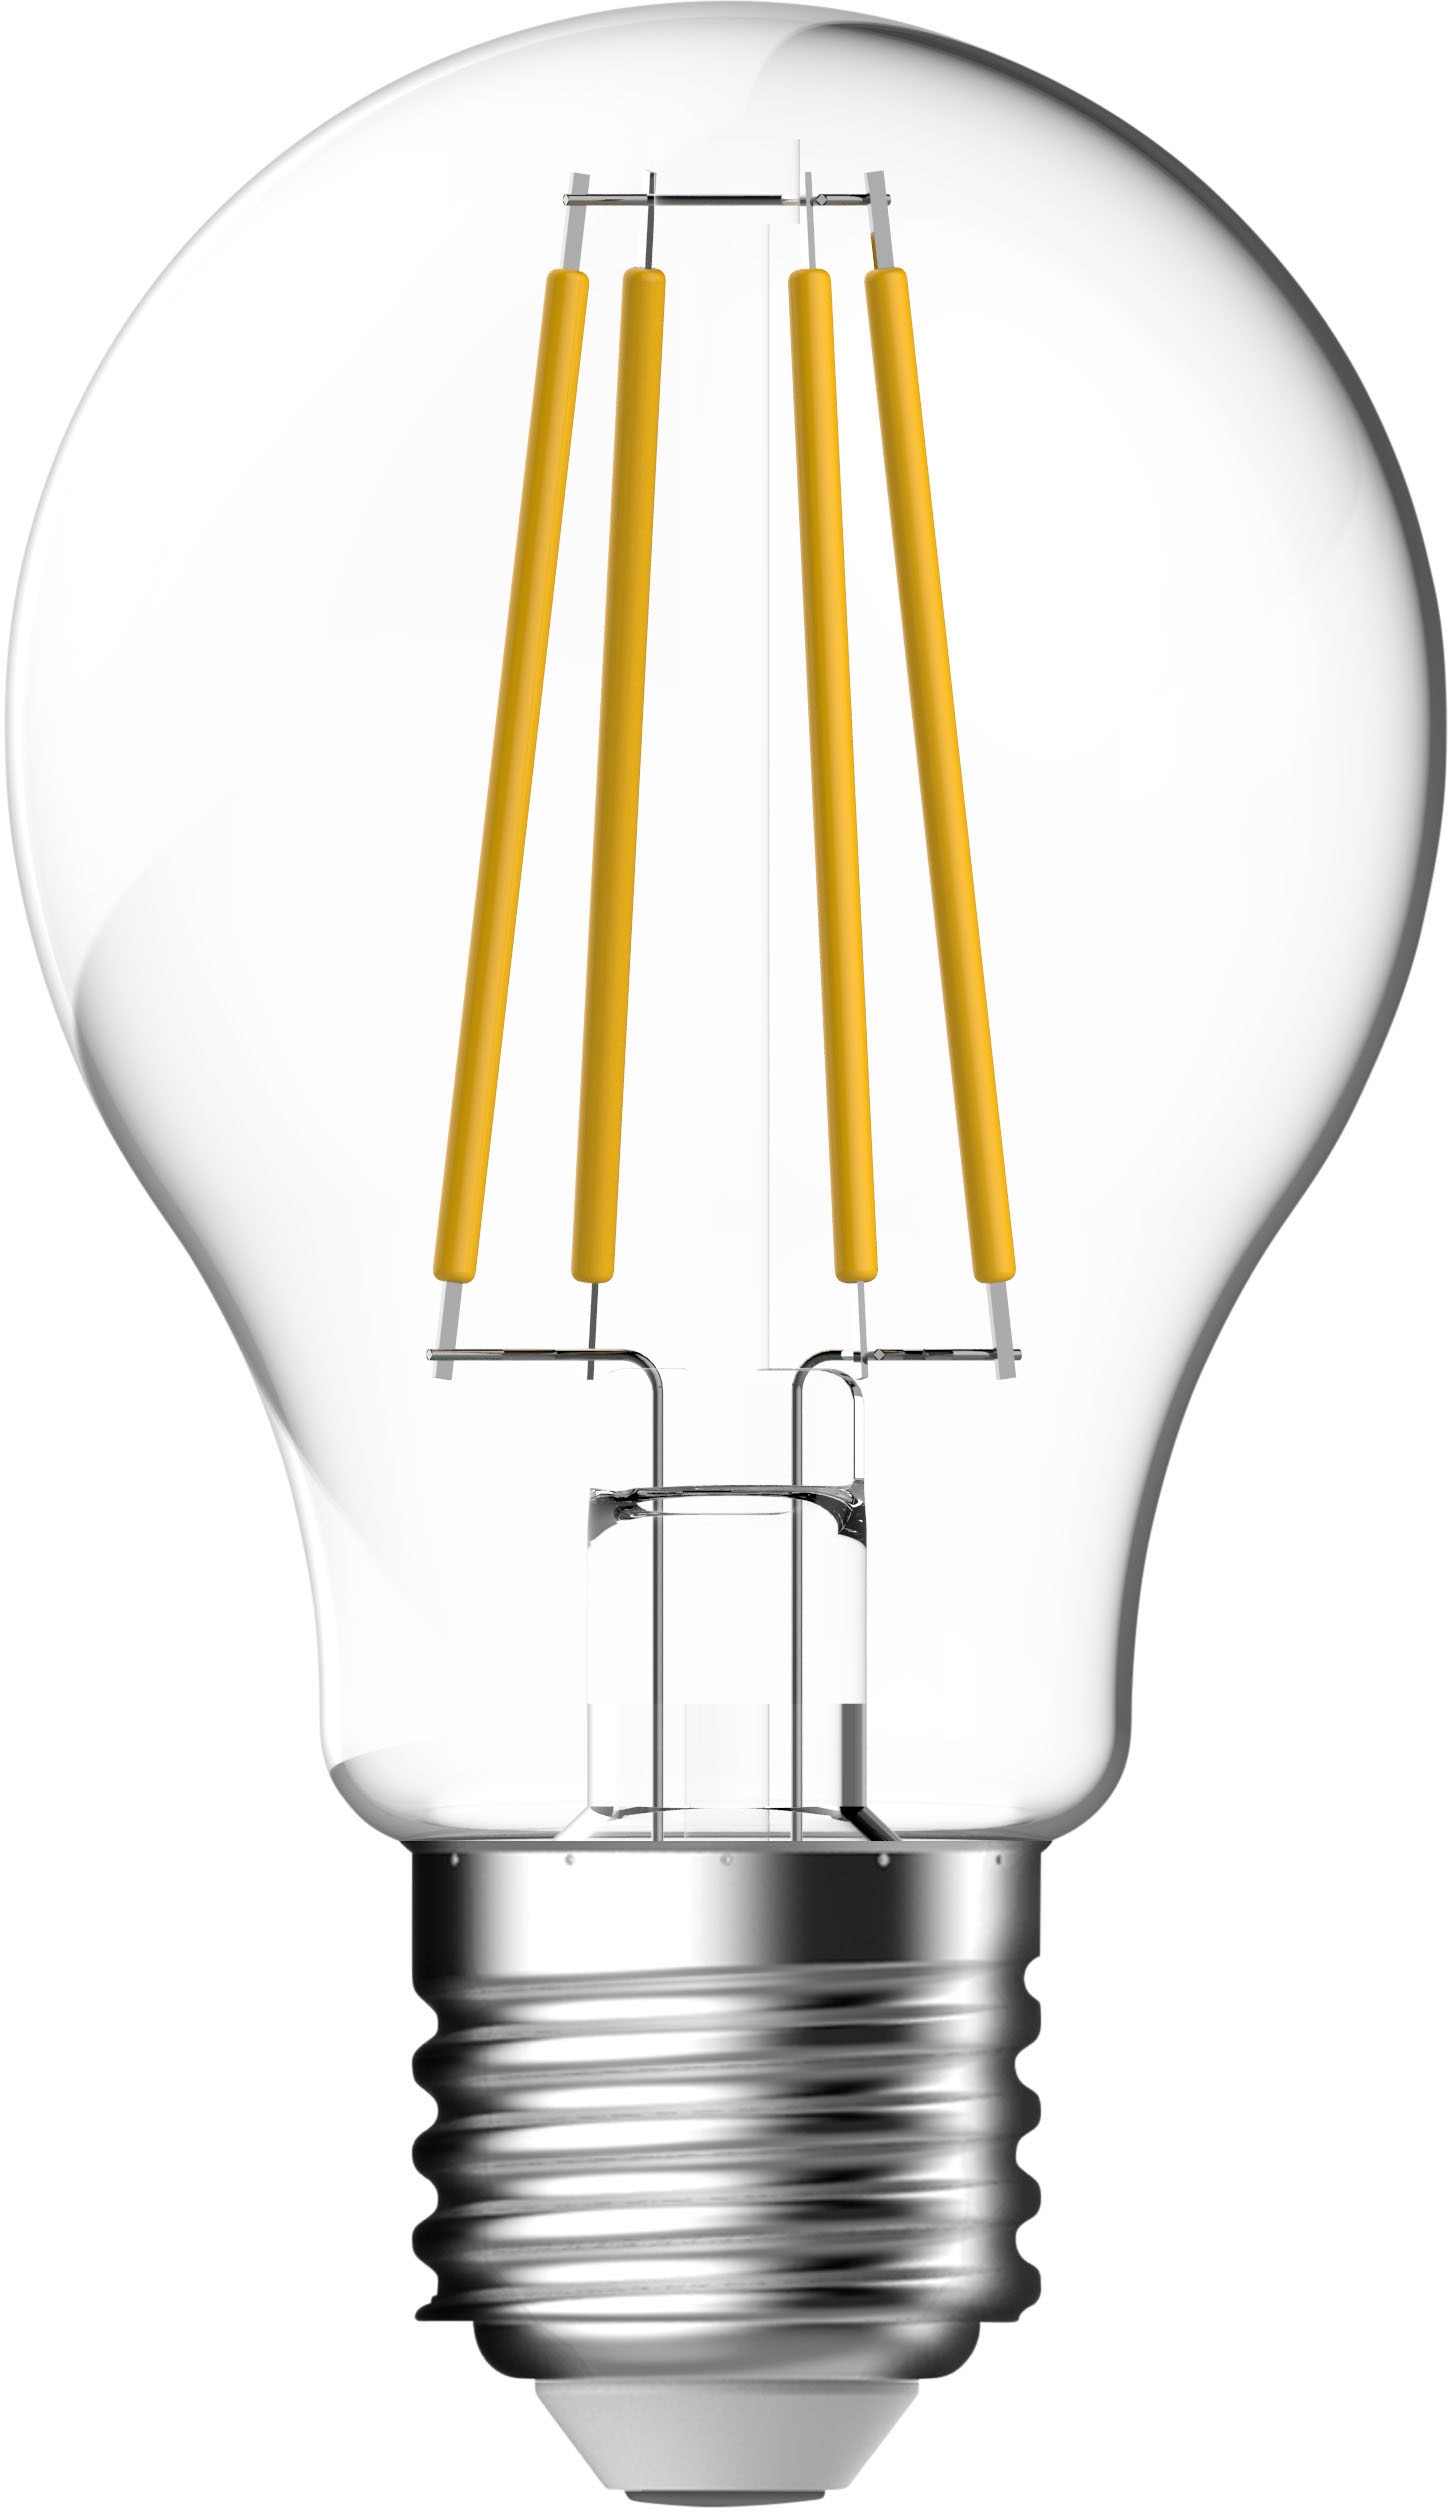 Nordlux LED-Leuchtmittel »Paere«, 6 St., Set mit 6 Stück, je 8,6 Watt